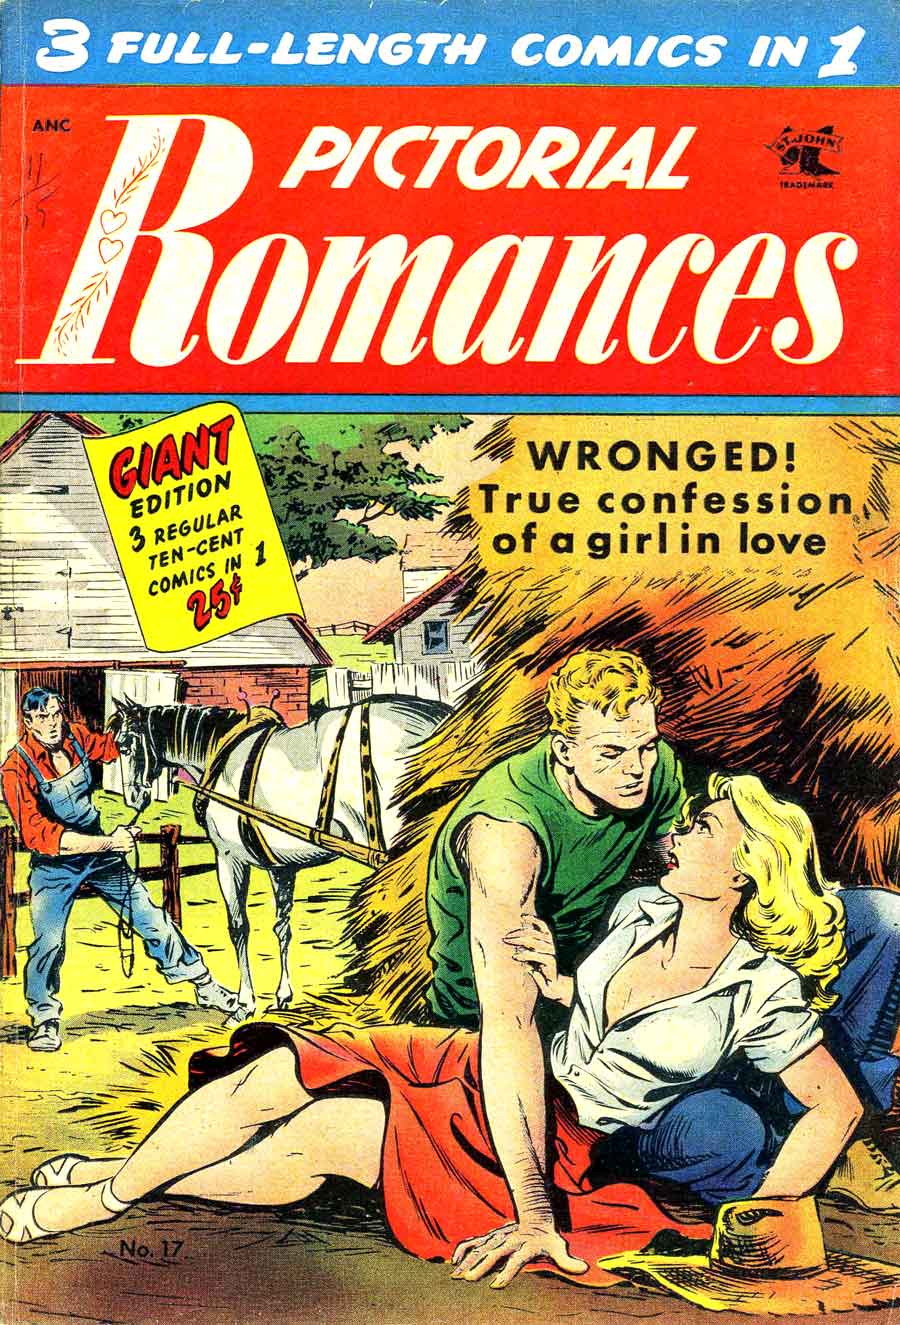 Pictorial Romances #17 st. john golden age 1950s romance comic book cover art by Matt Baker